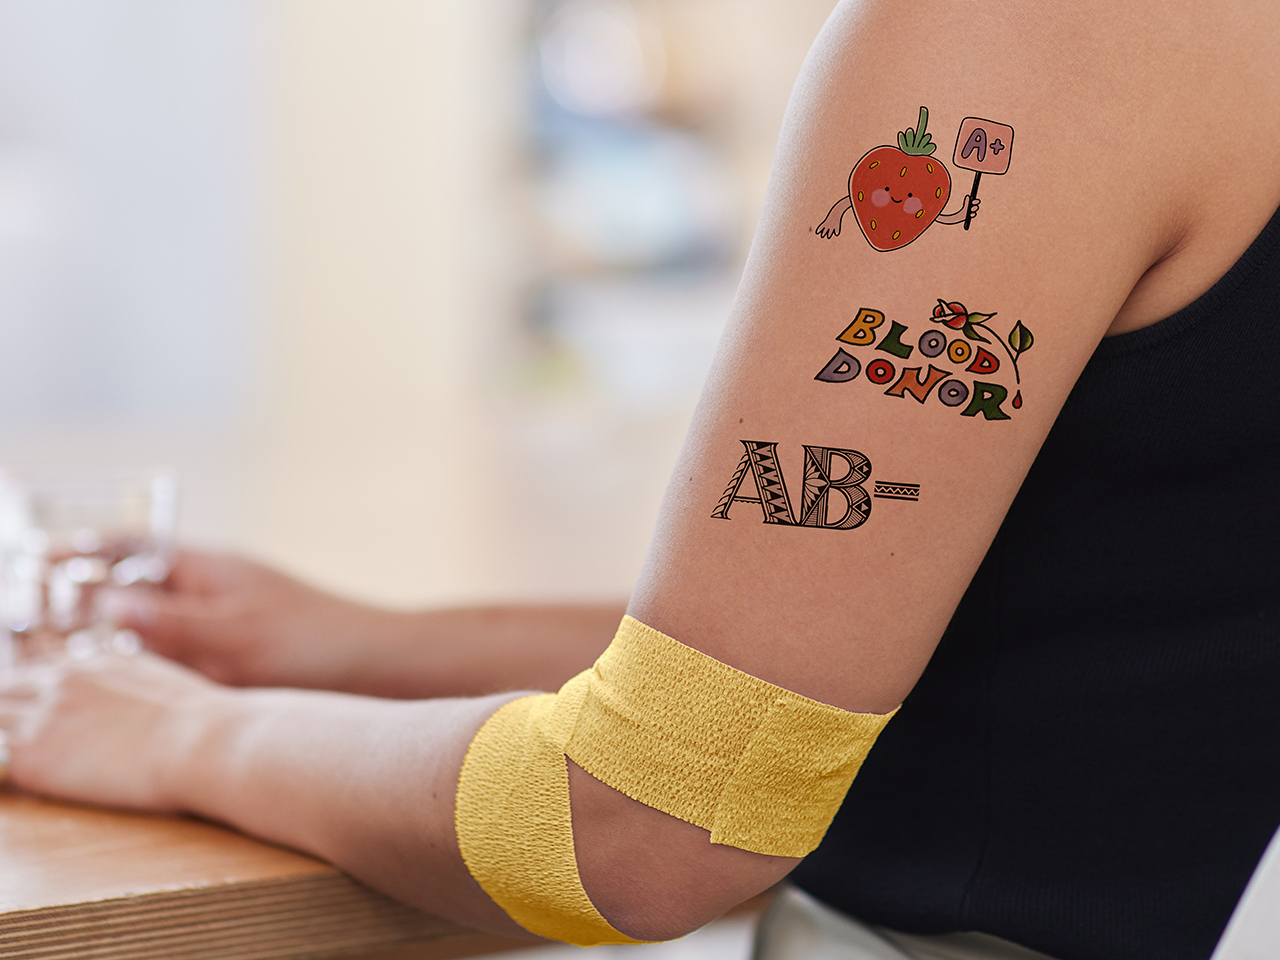 tattoo blood donation rules